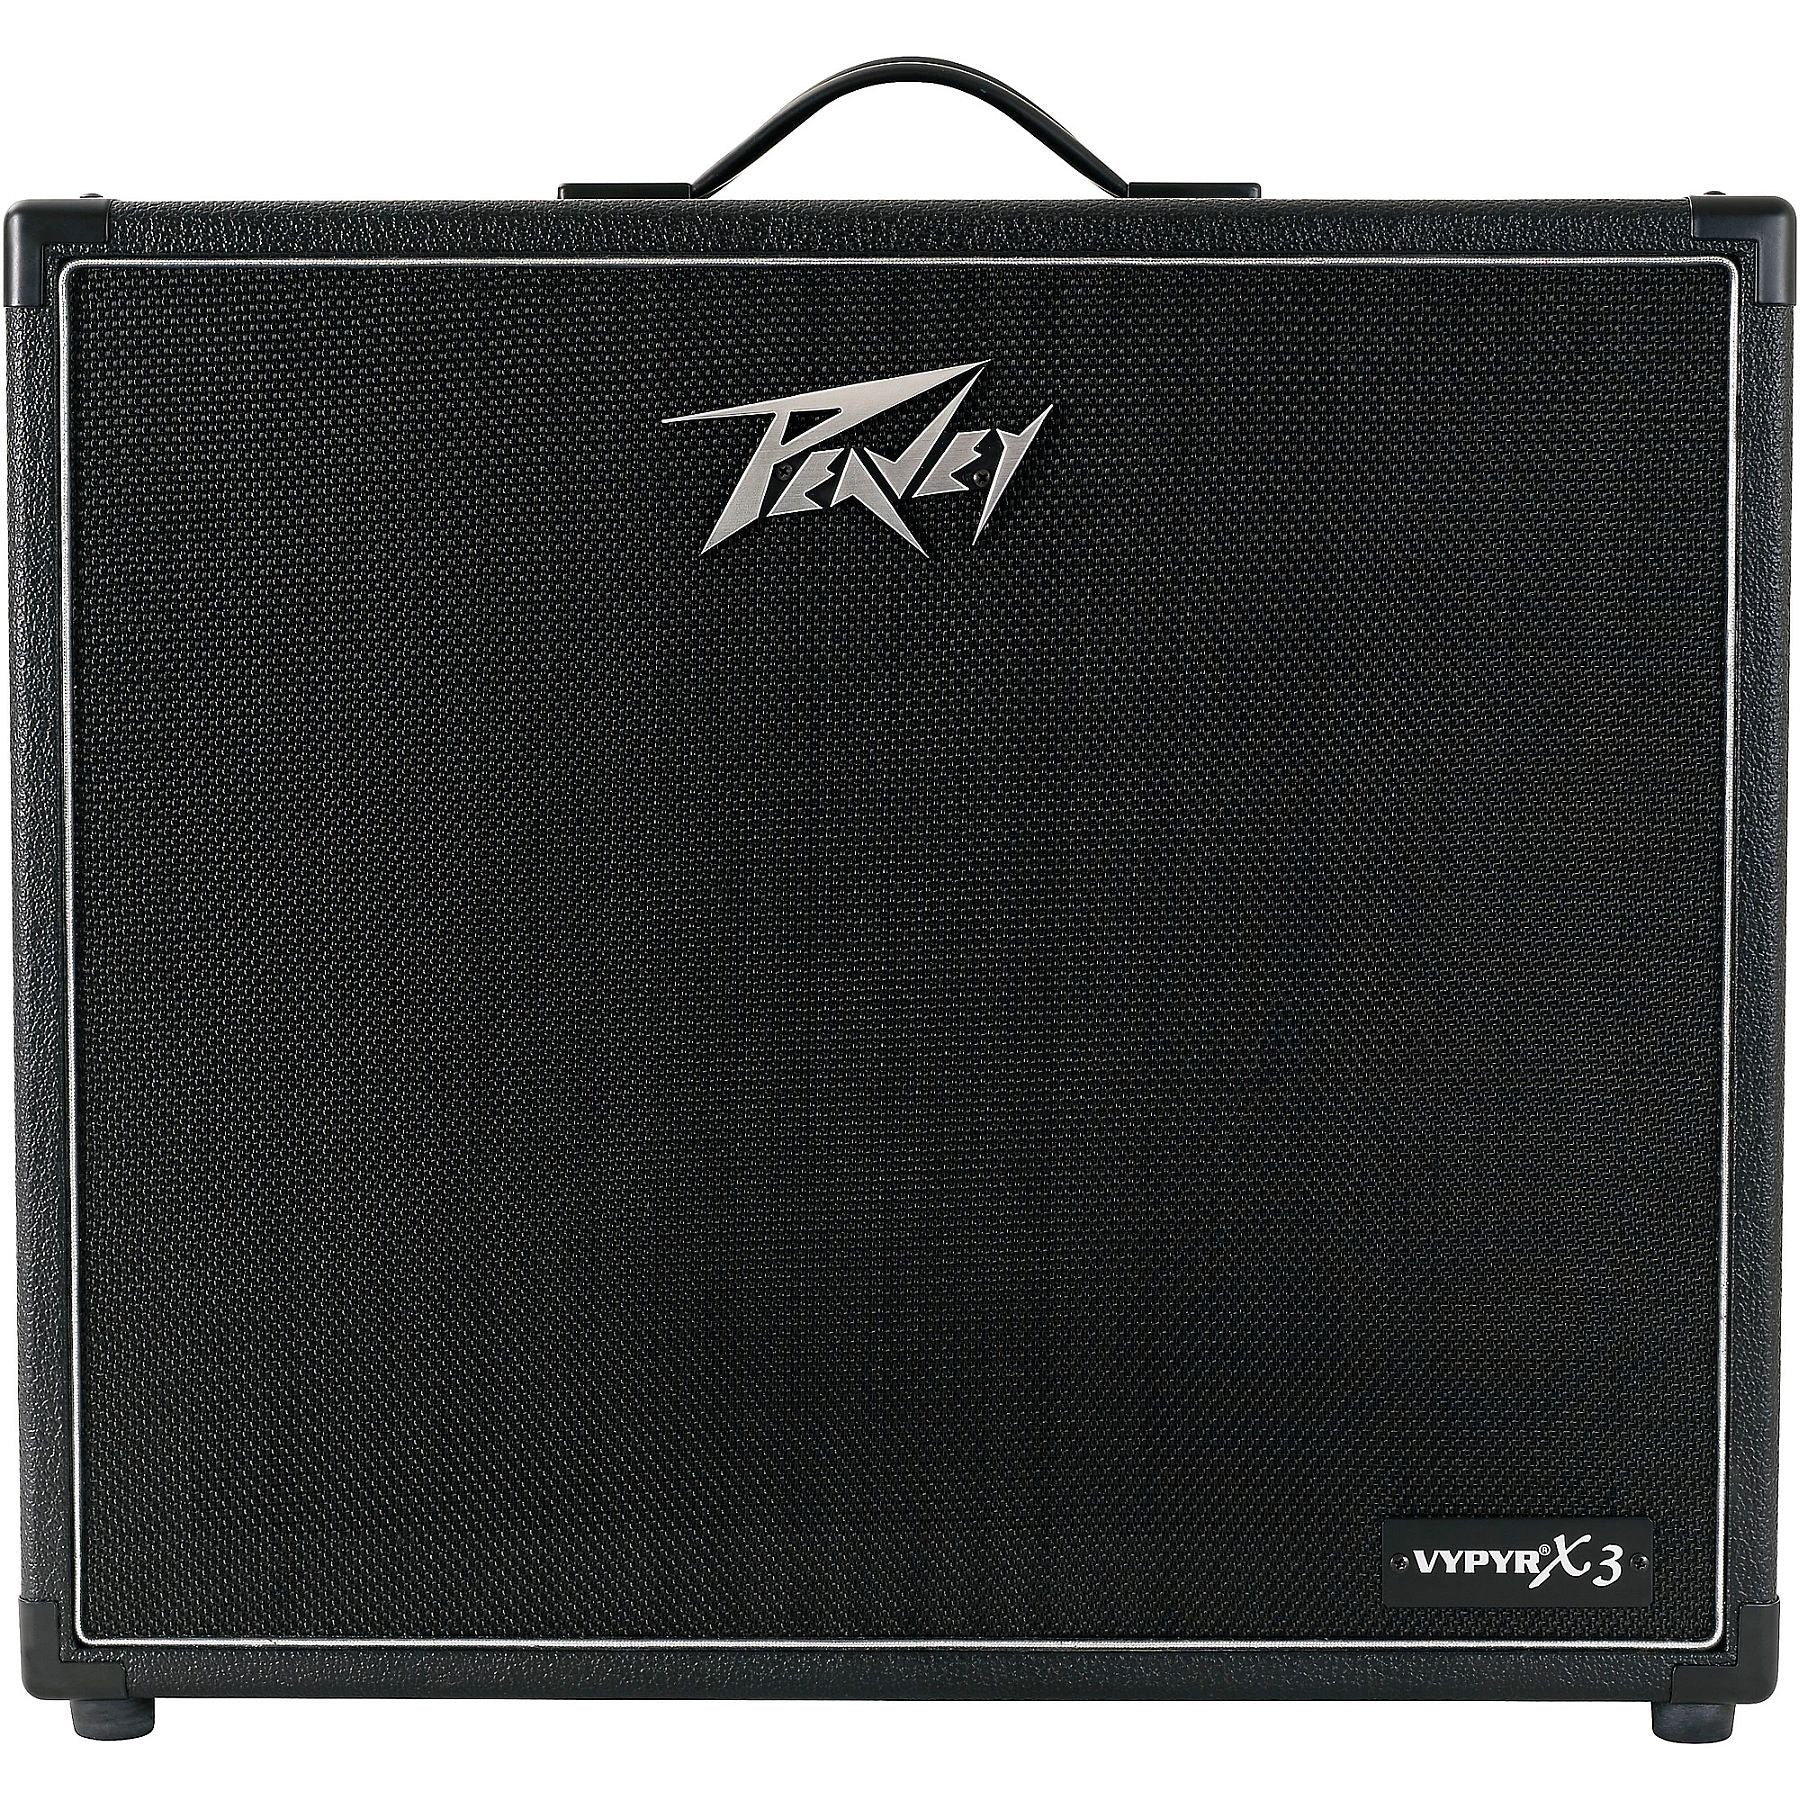 Peavey Vypyr X3 100 Watt 1x12 inch Modeling Guitar/Bass/Acoustic Combo Amplifier 03617810